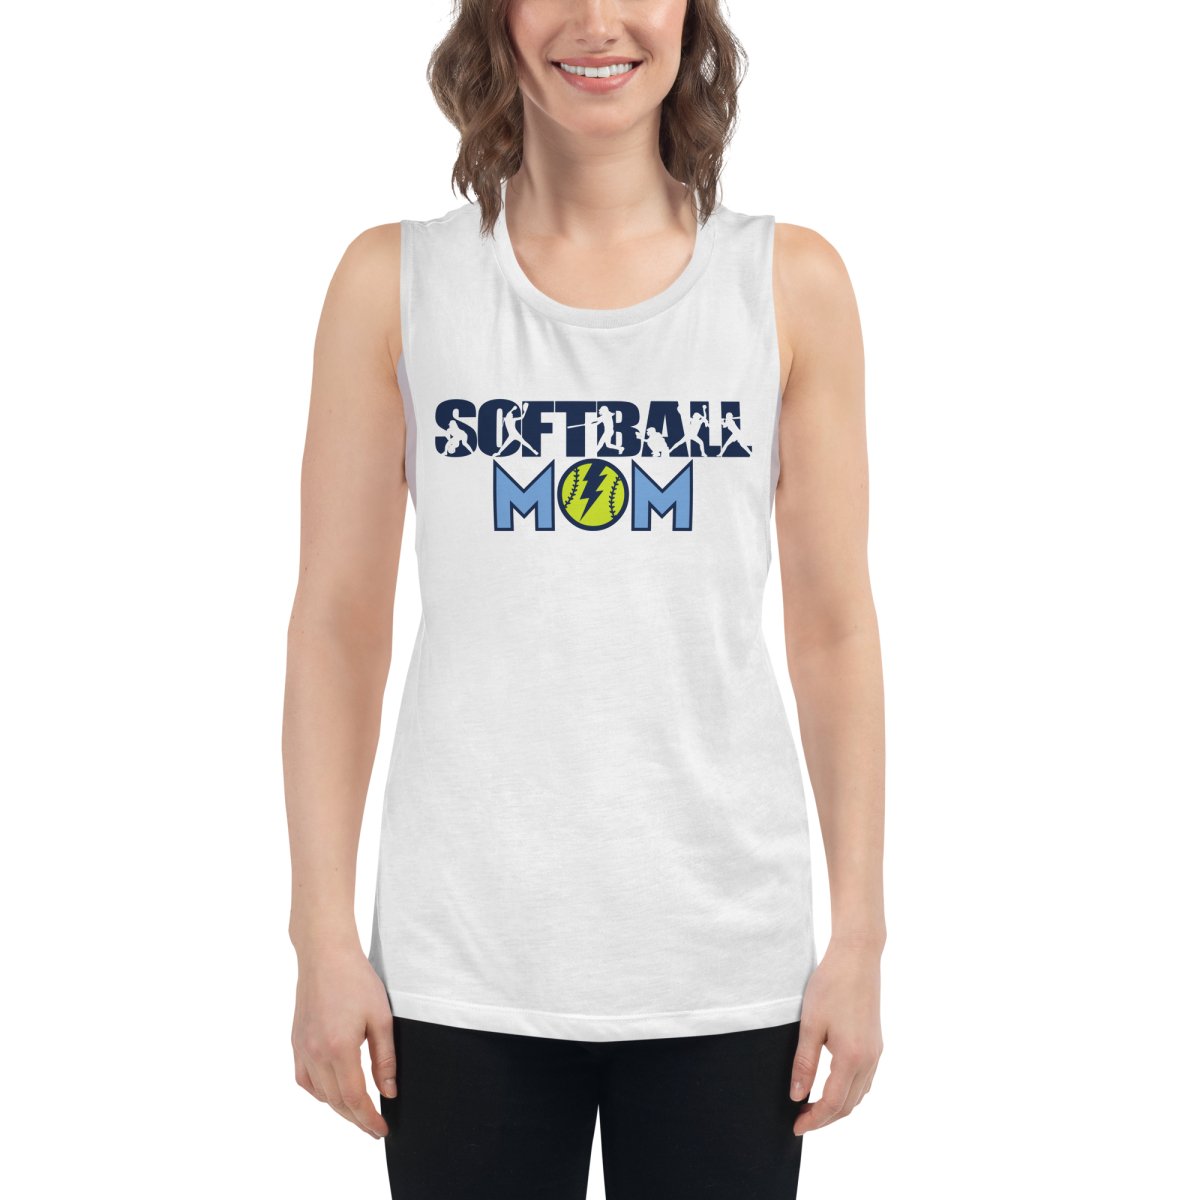 Storm Softball Mom Ladies’ Muscle Tank